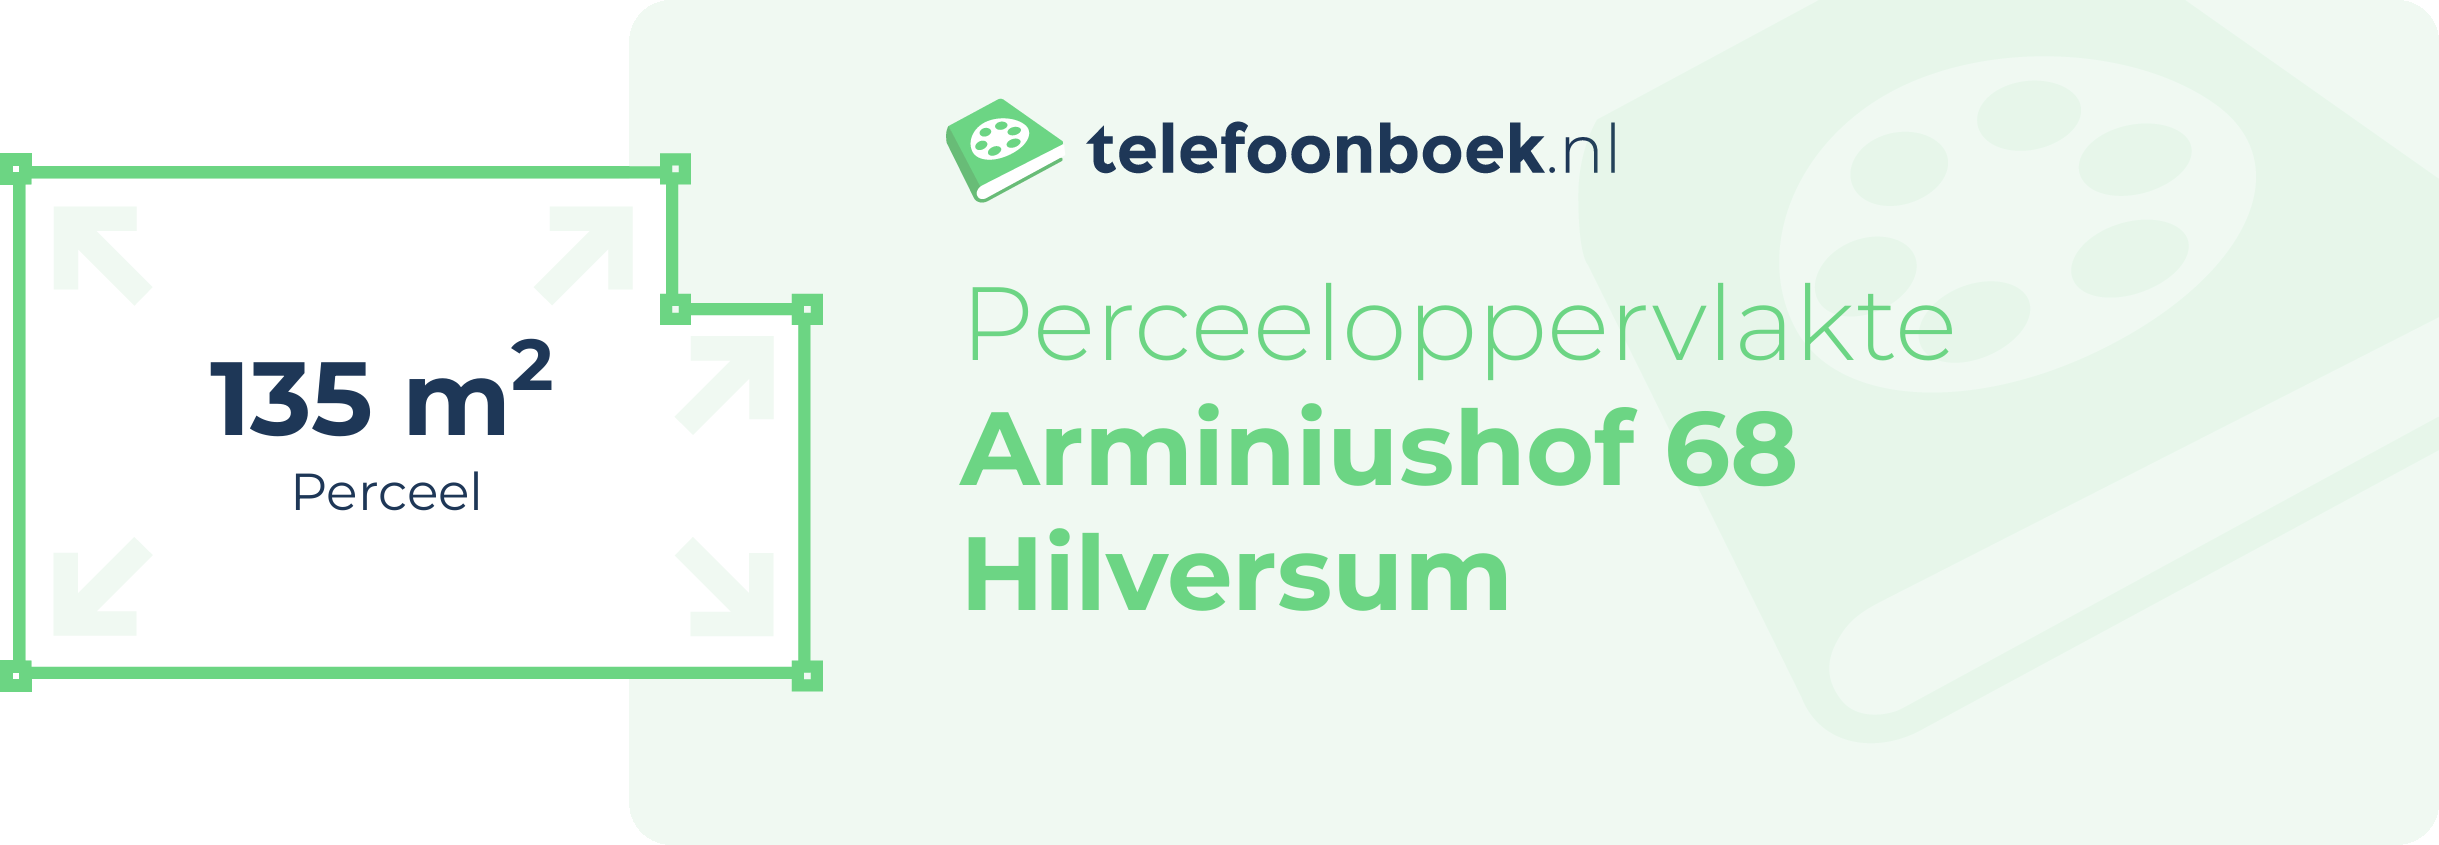 Perceeloppervlakte Arminiushof 68 Hilversum